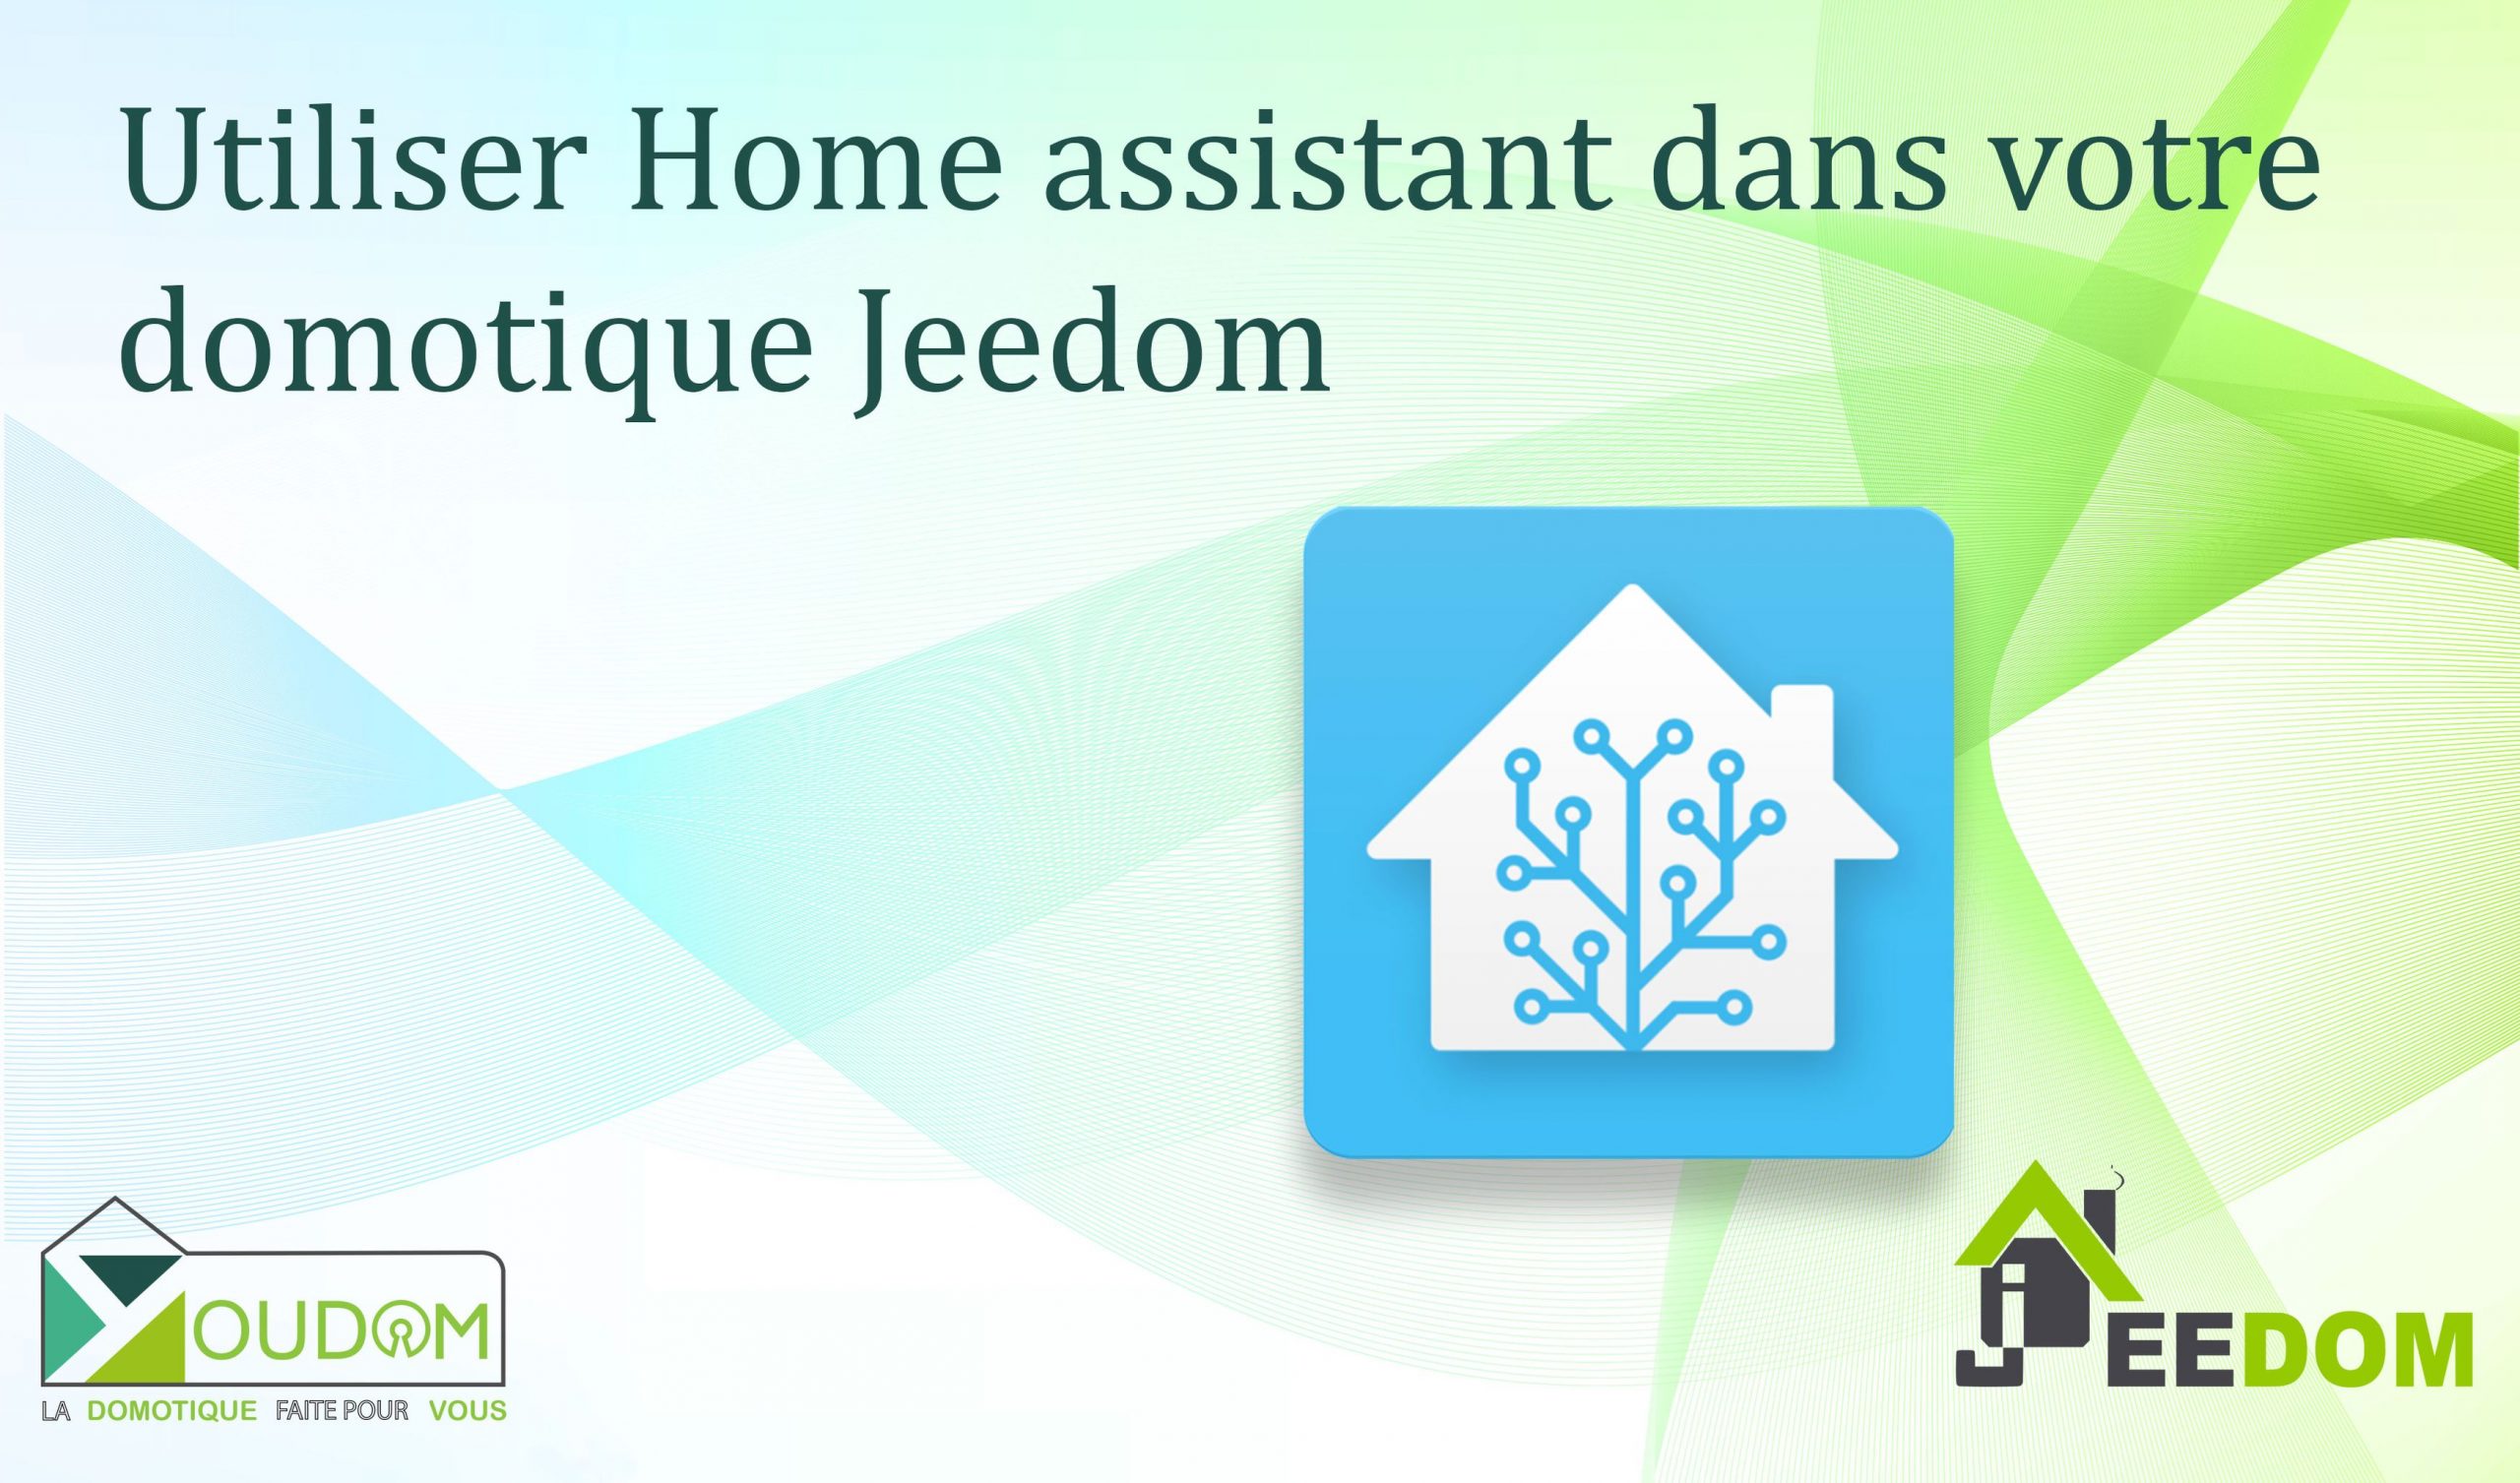 You are currently viewing Utiliser Home assistant dans votre domotique Jeedom